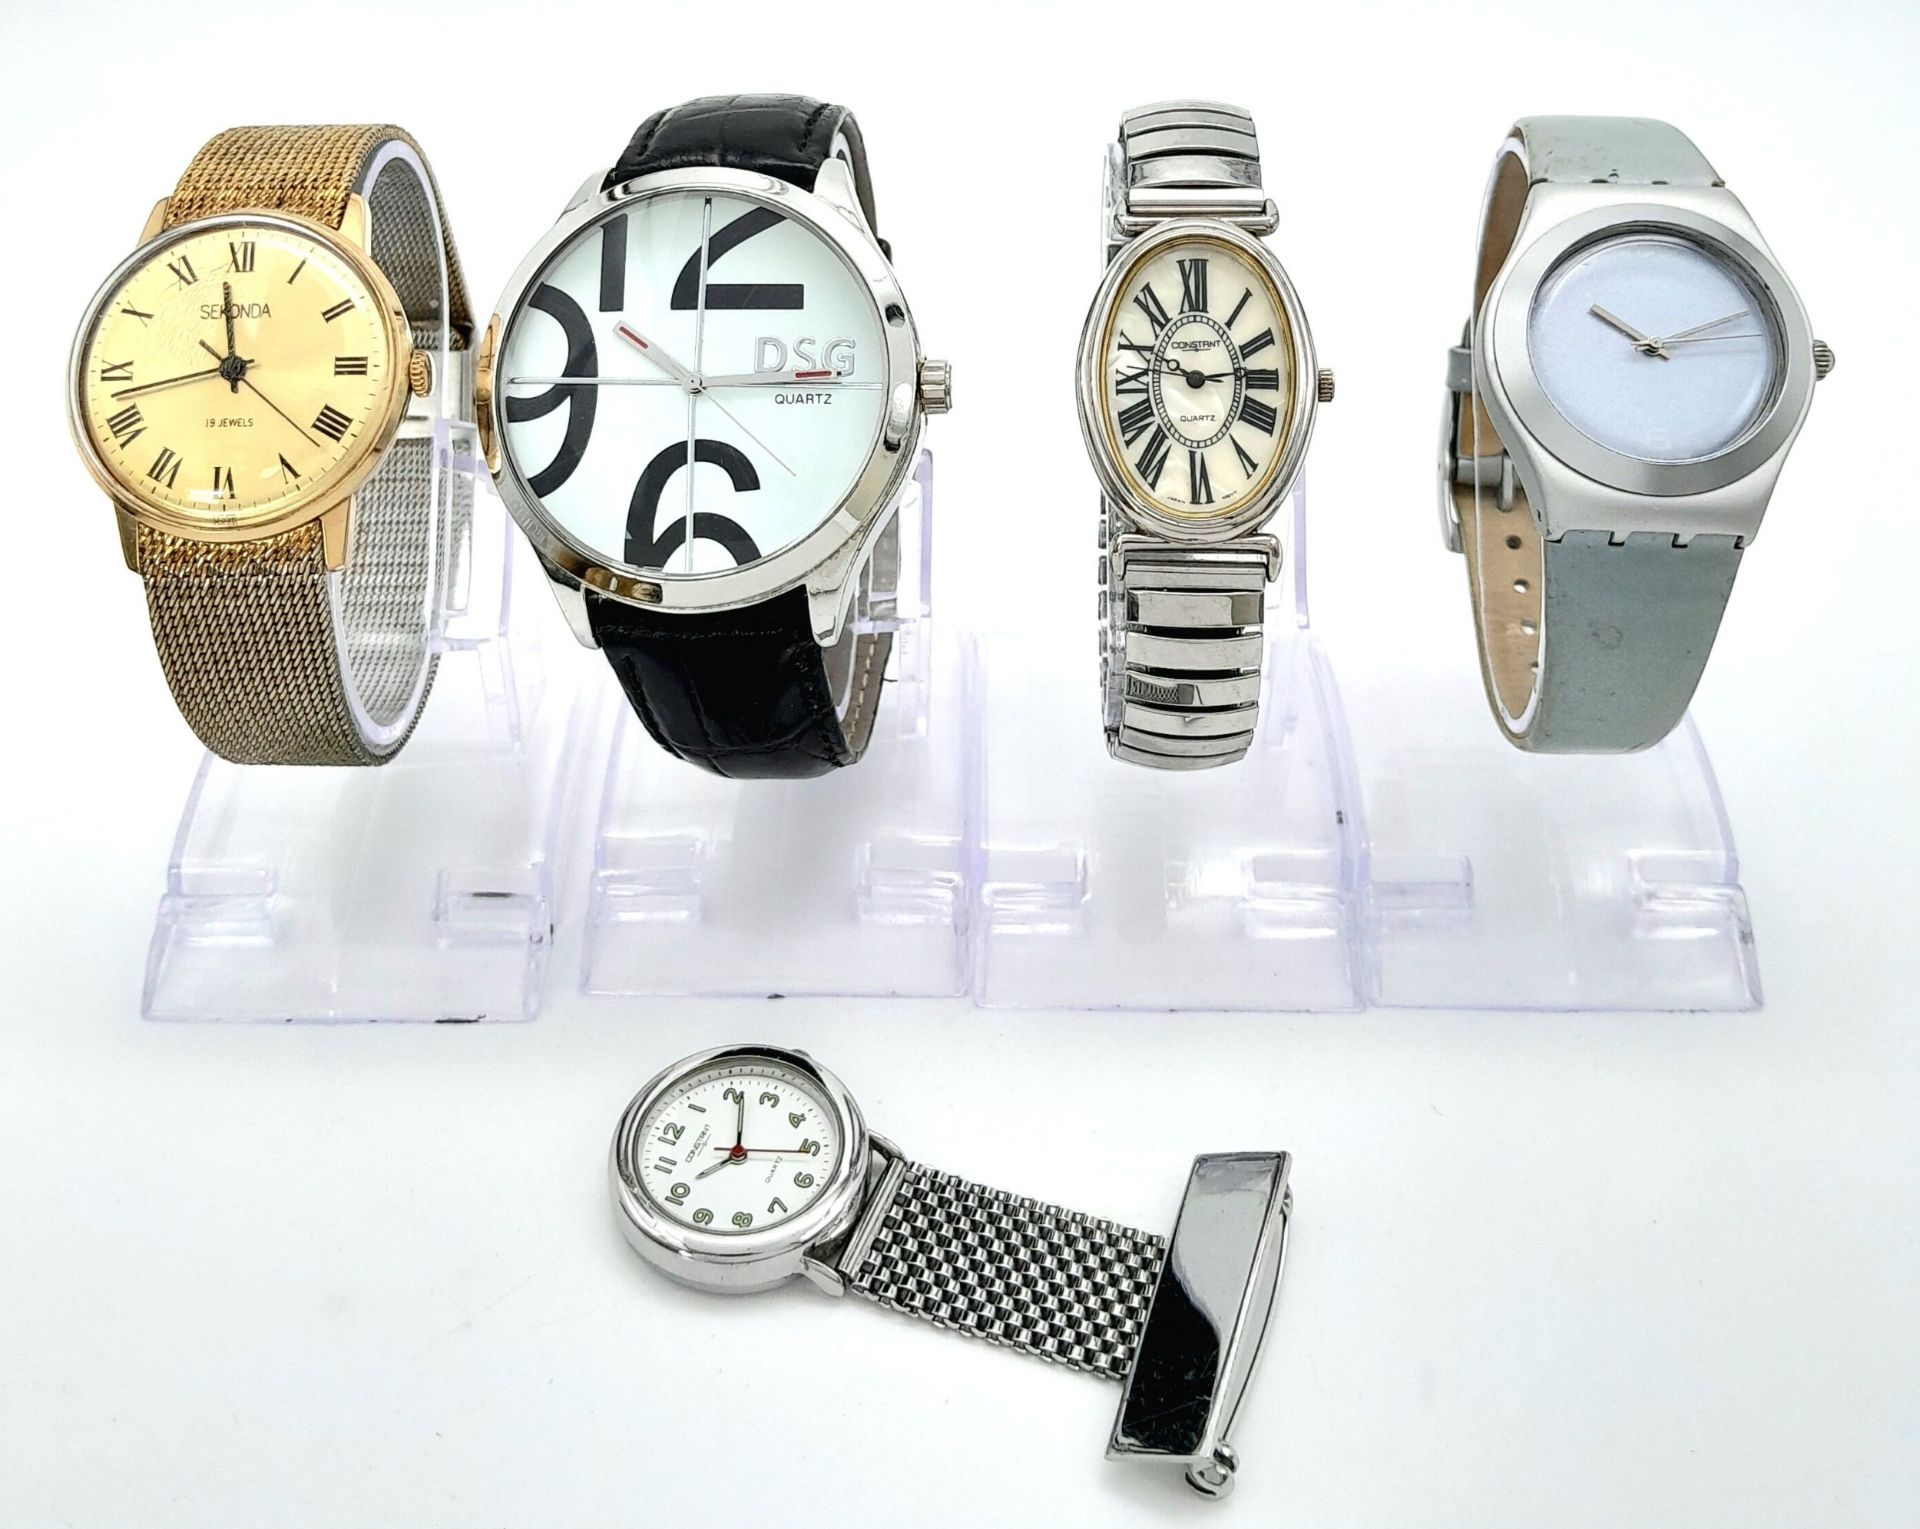 A Parcel of Five Vintage Watches. Comprising: 1) A Ladies Roman Numeral Oval Case Quartz Watch by